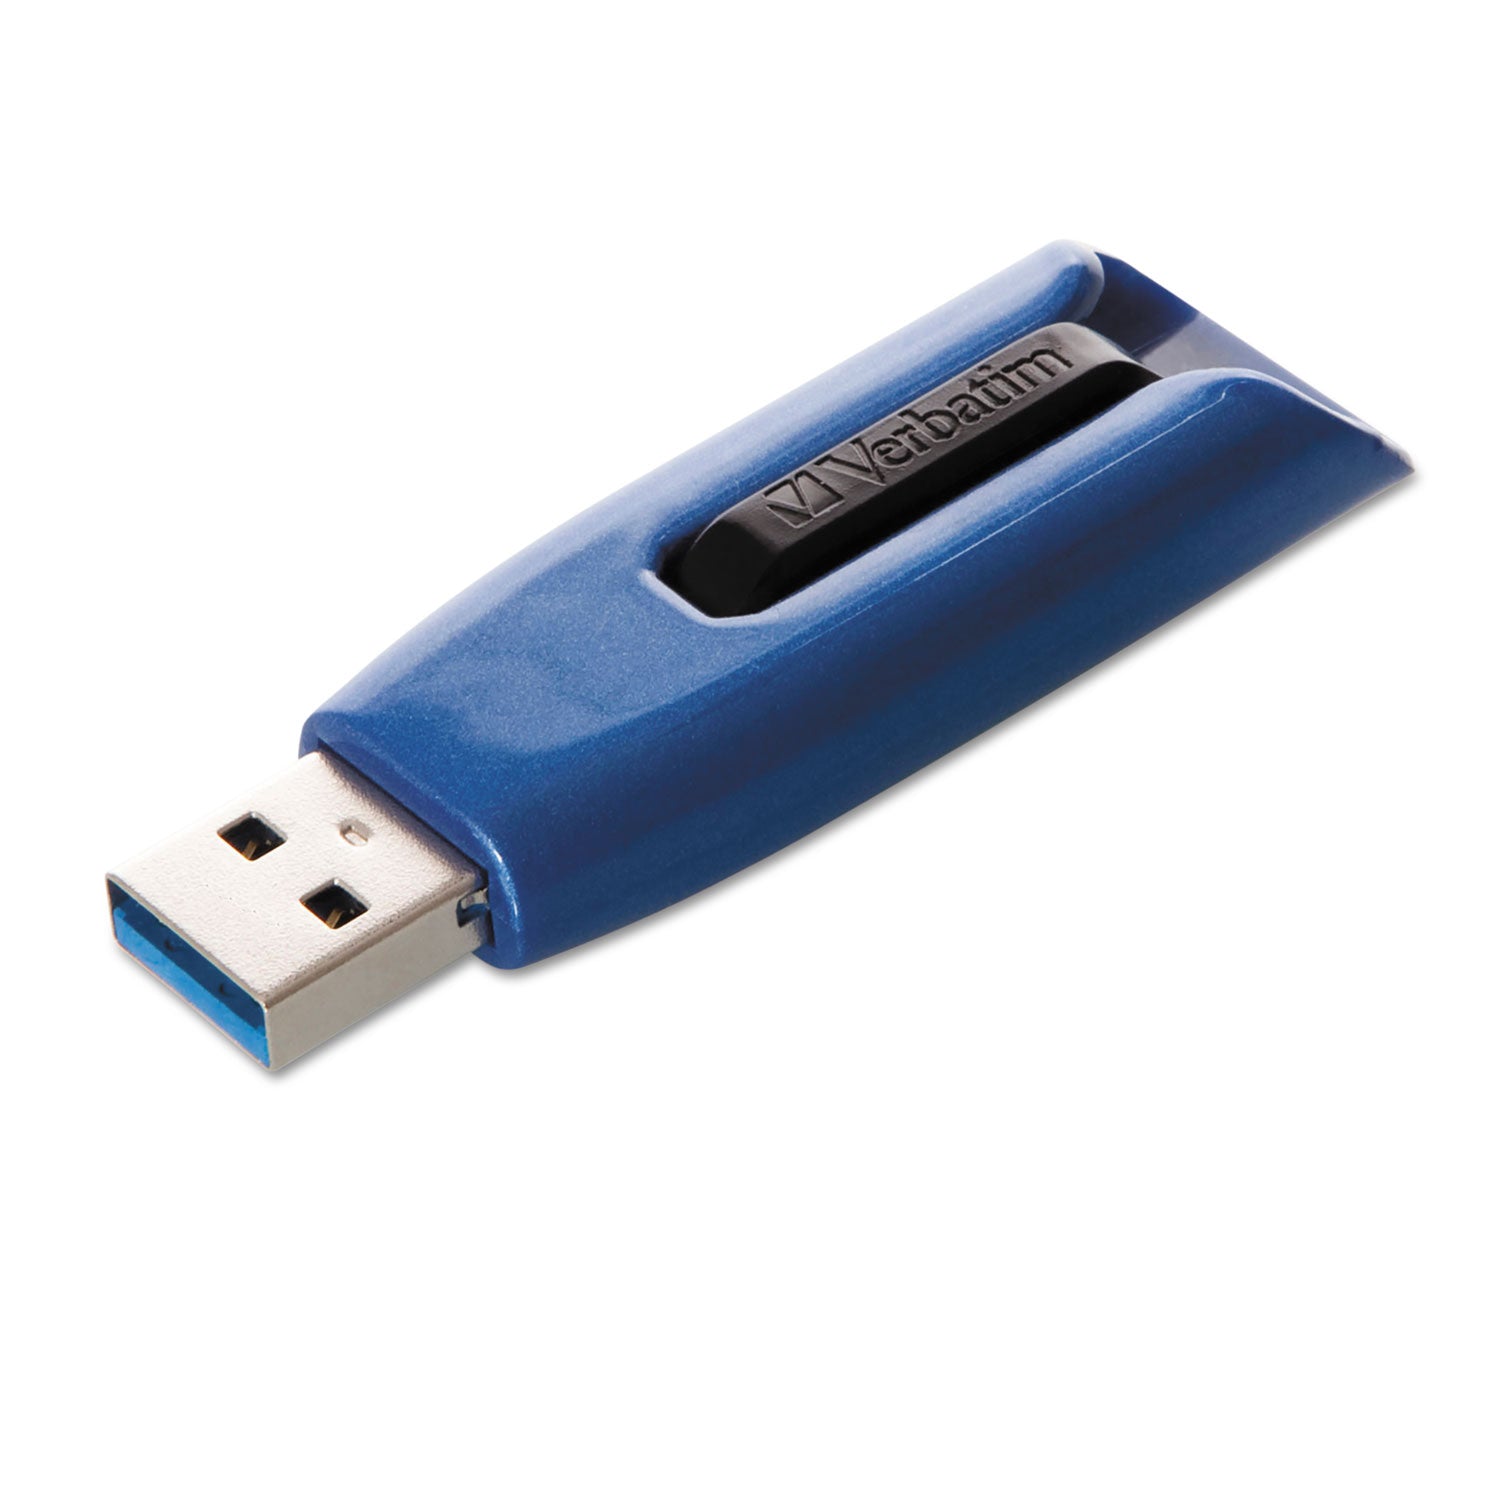 V3 Max USB 3.0 Flash Drive, 64 GB, Blue - 